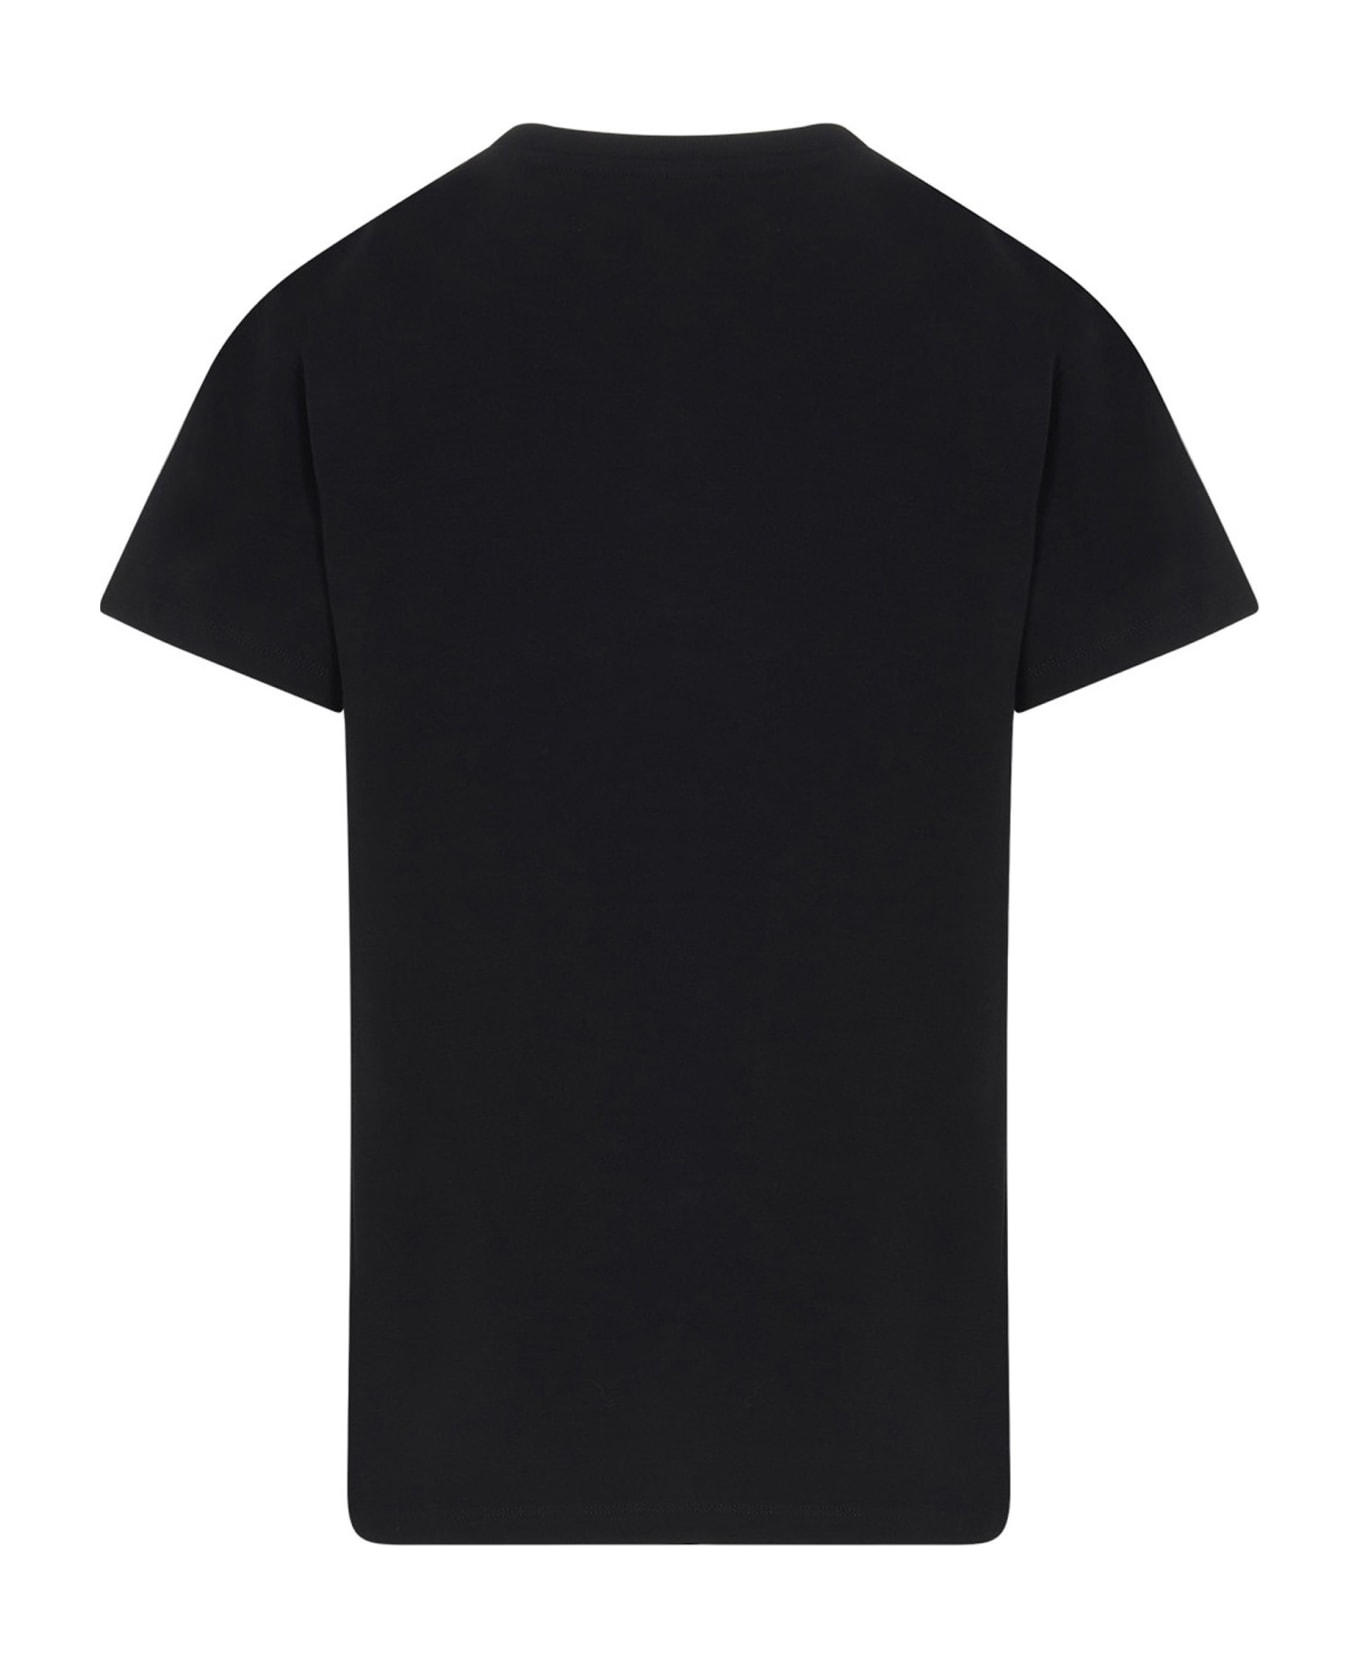 Cool TM 'cool T.m' T-shirt - Black  